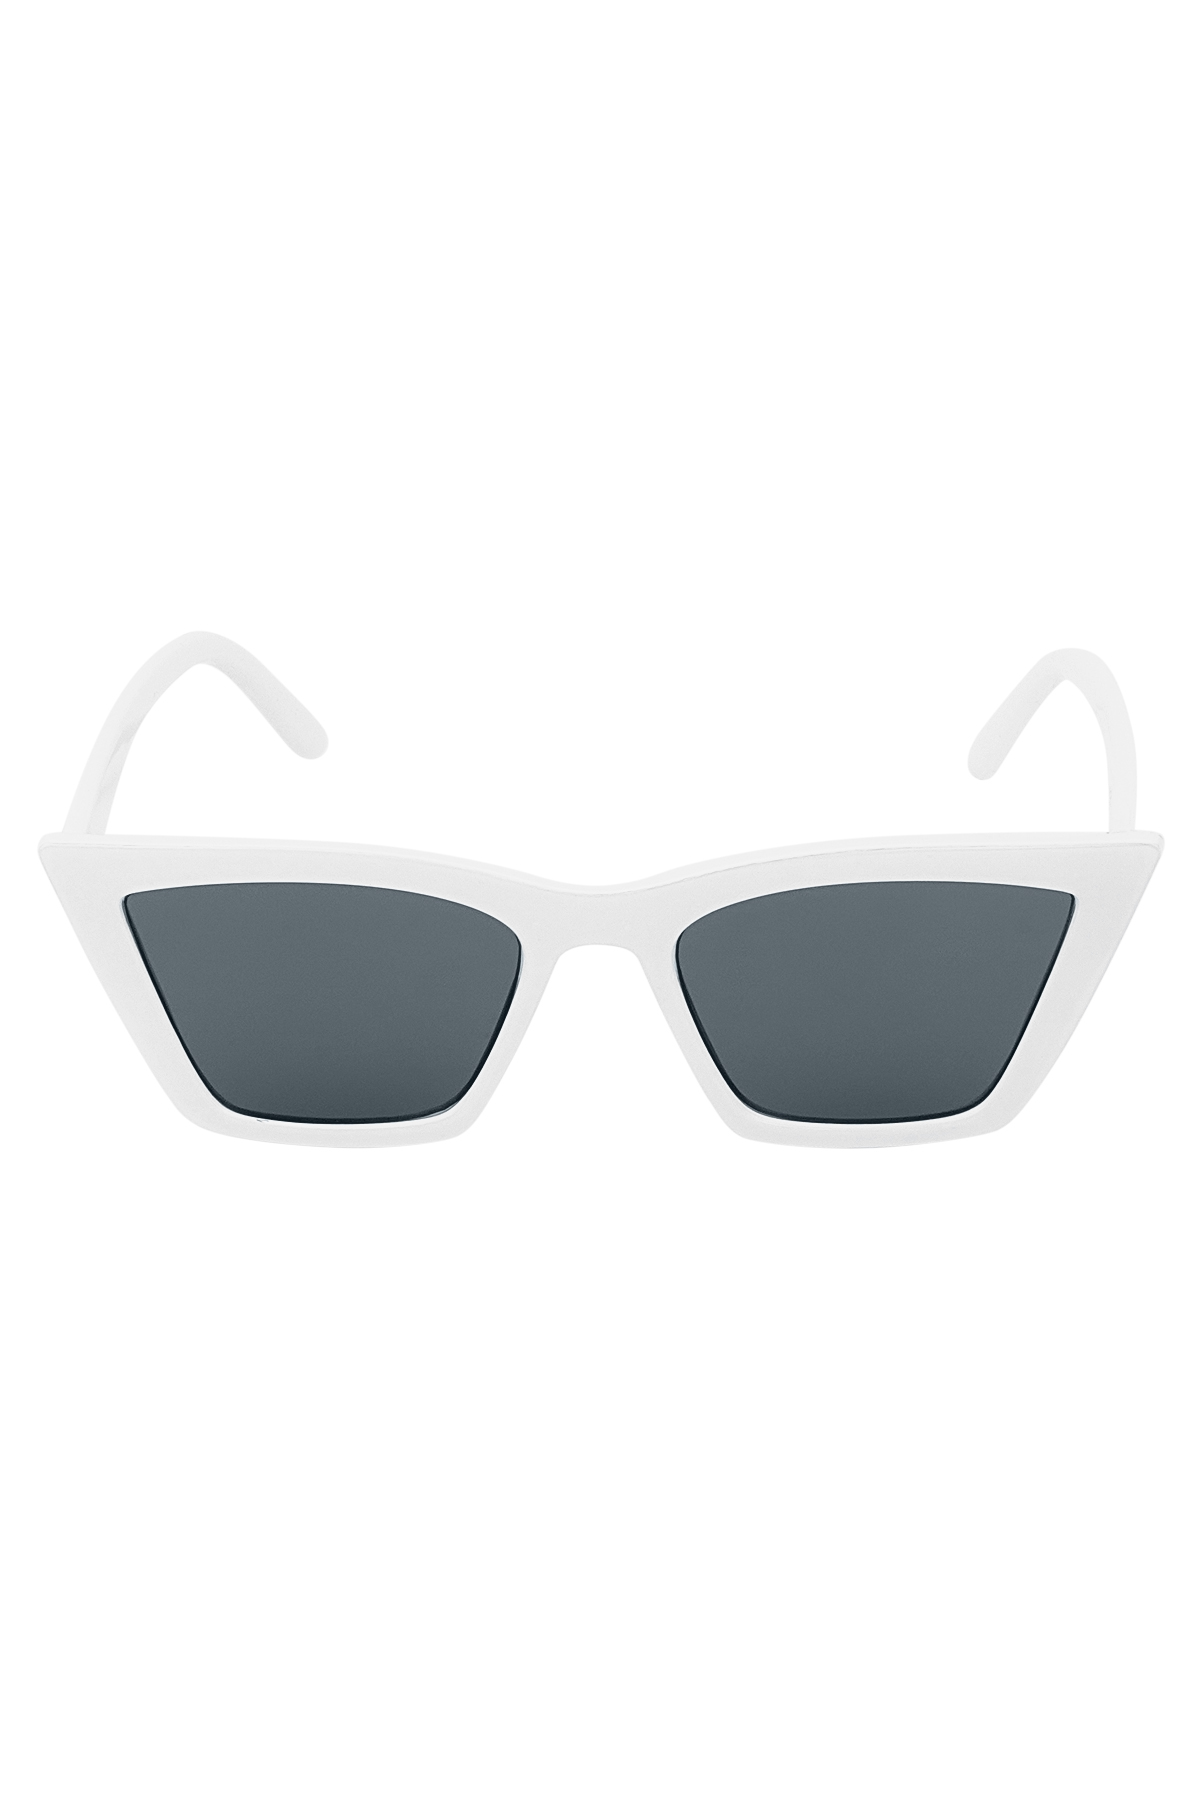 Monochrome cat eye sunglasses - black and white h5 Picture5